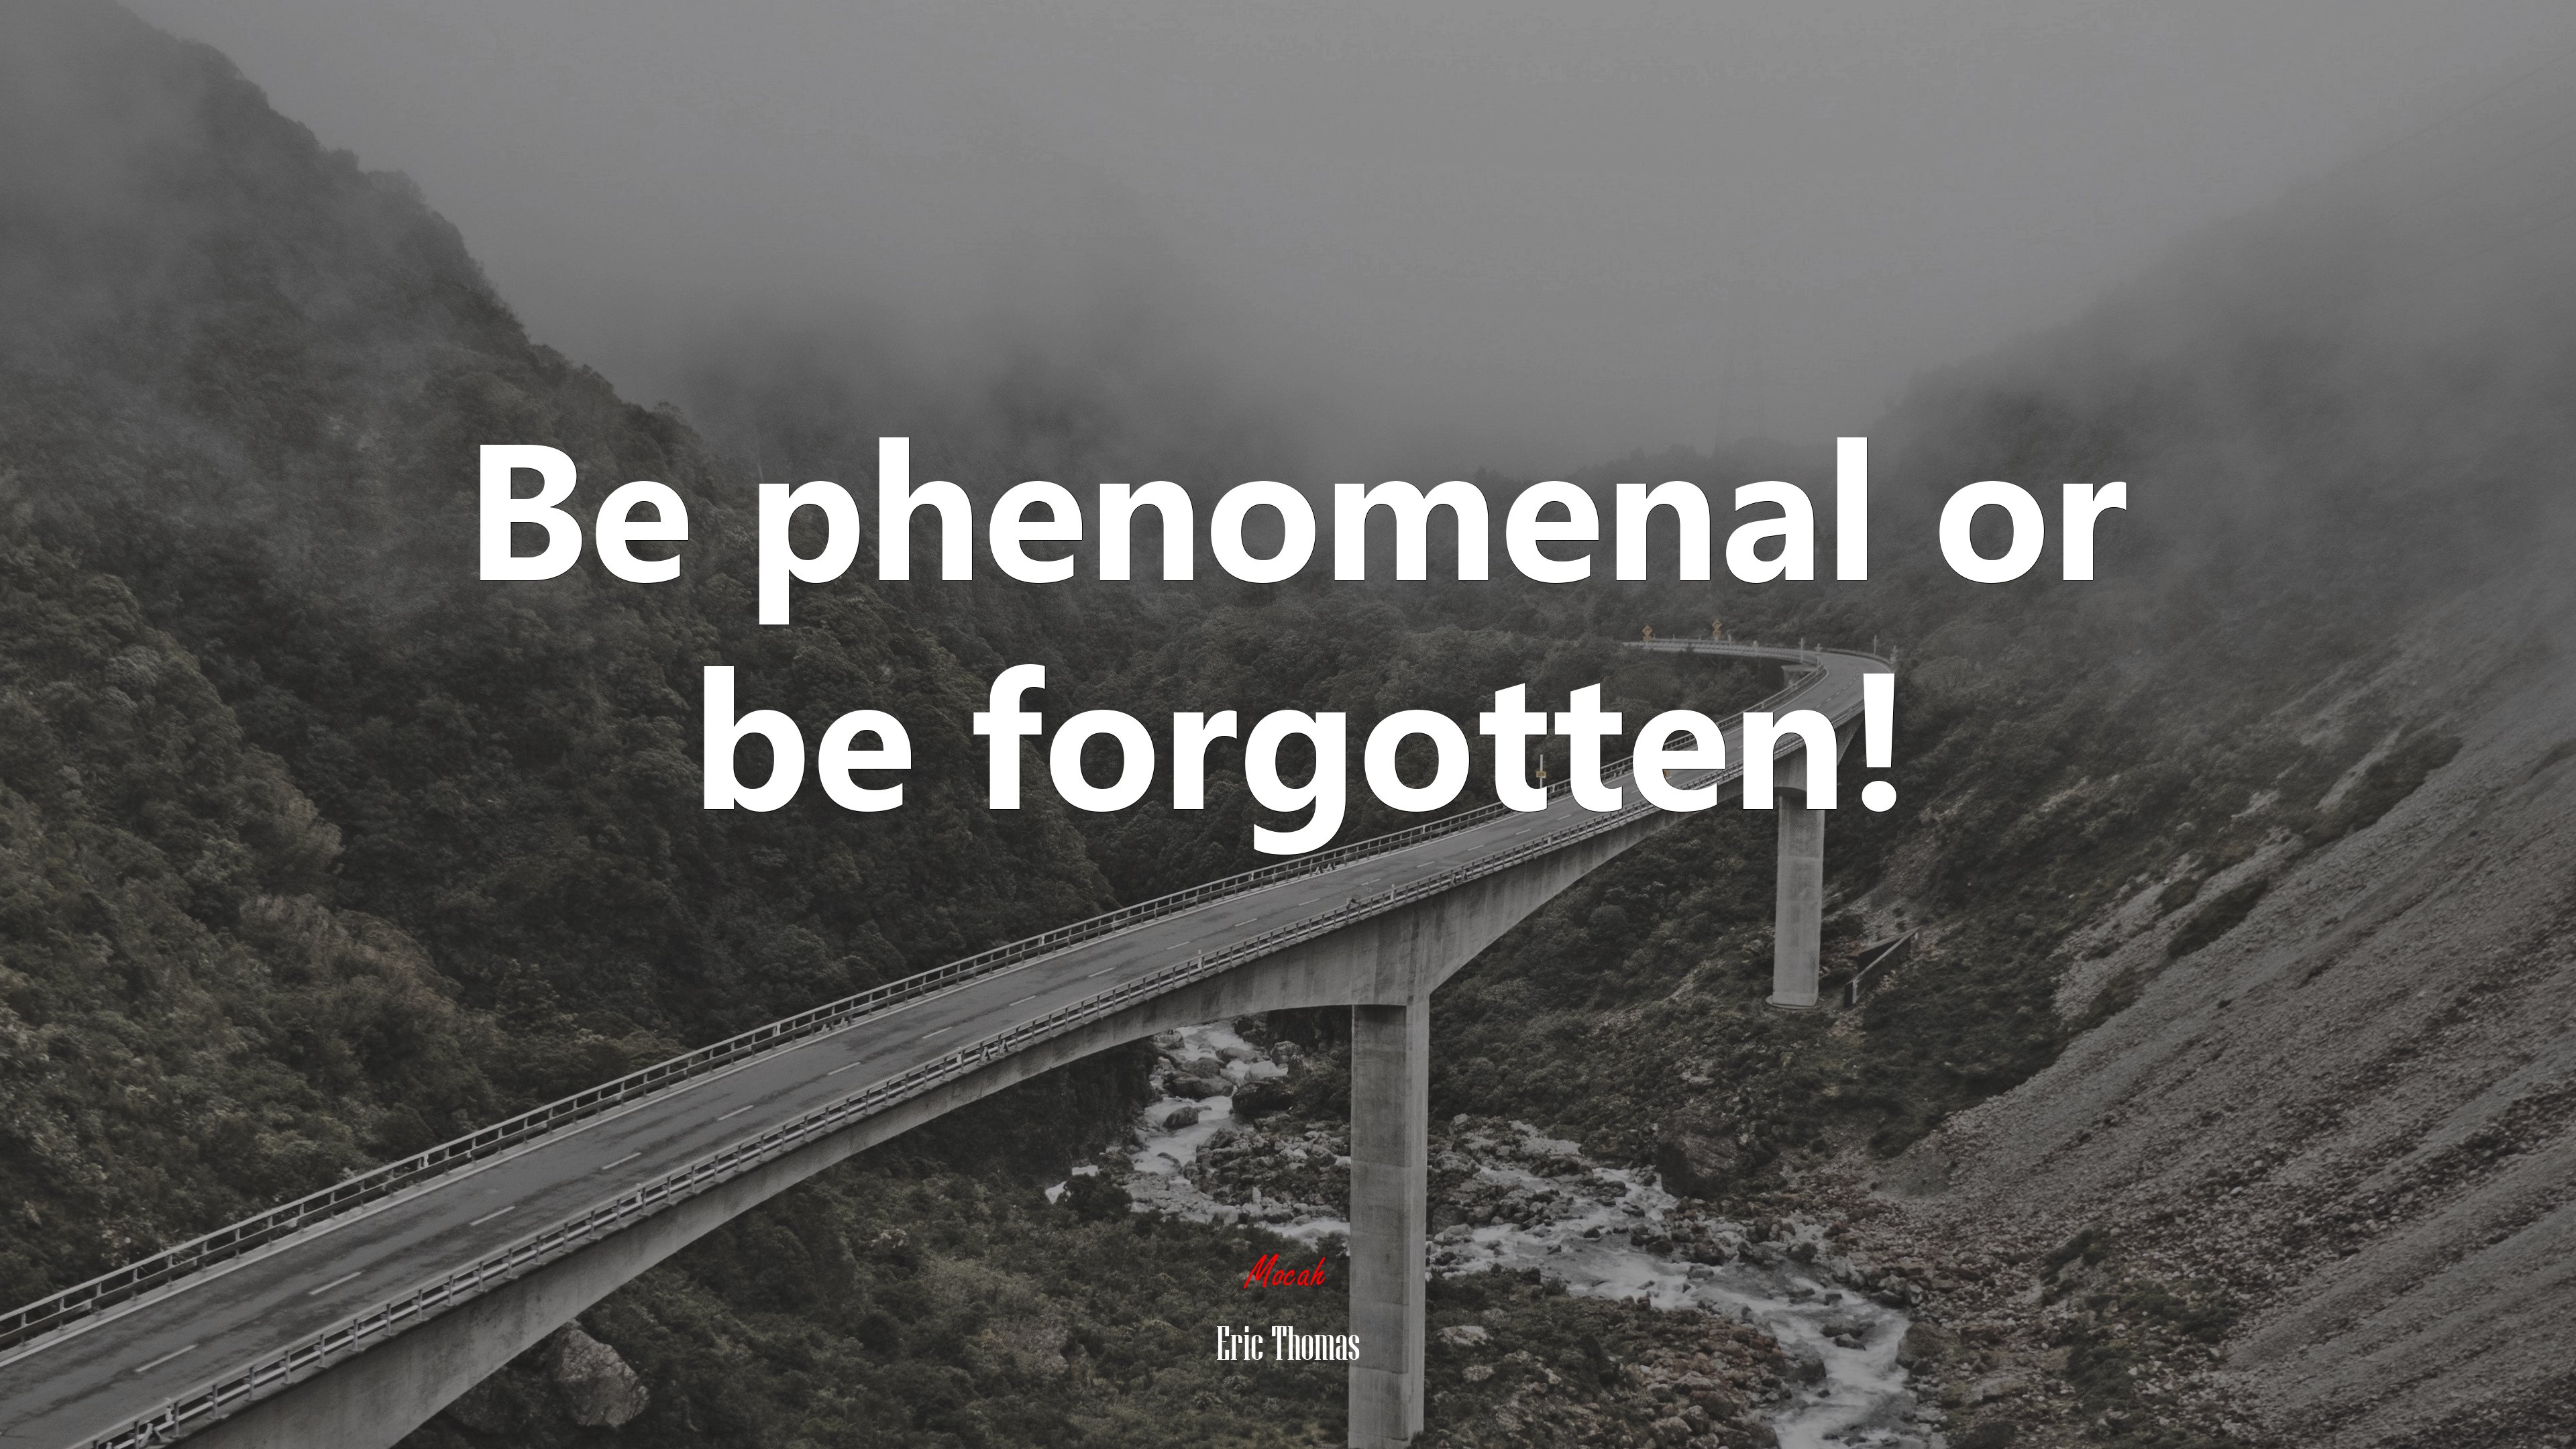 Be phenomenal or be forgotten eric thomas quote